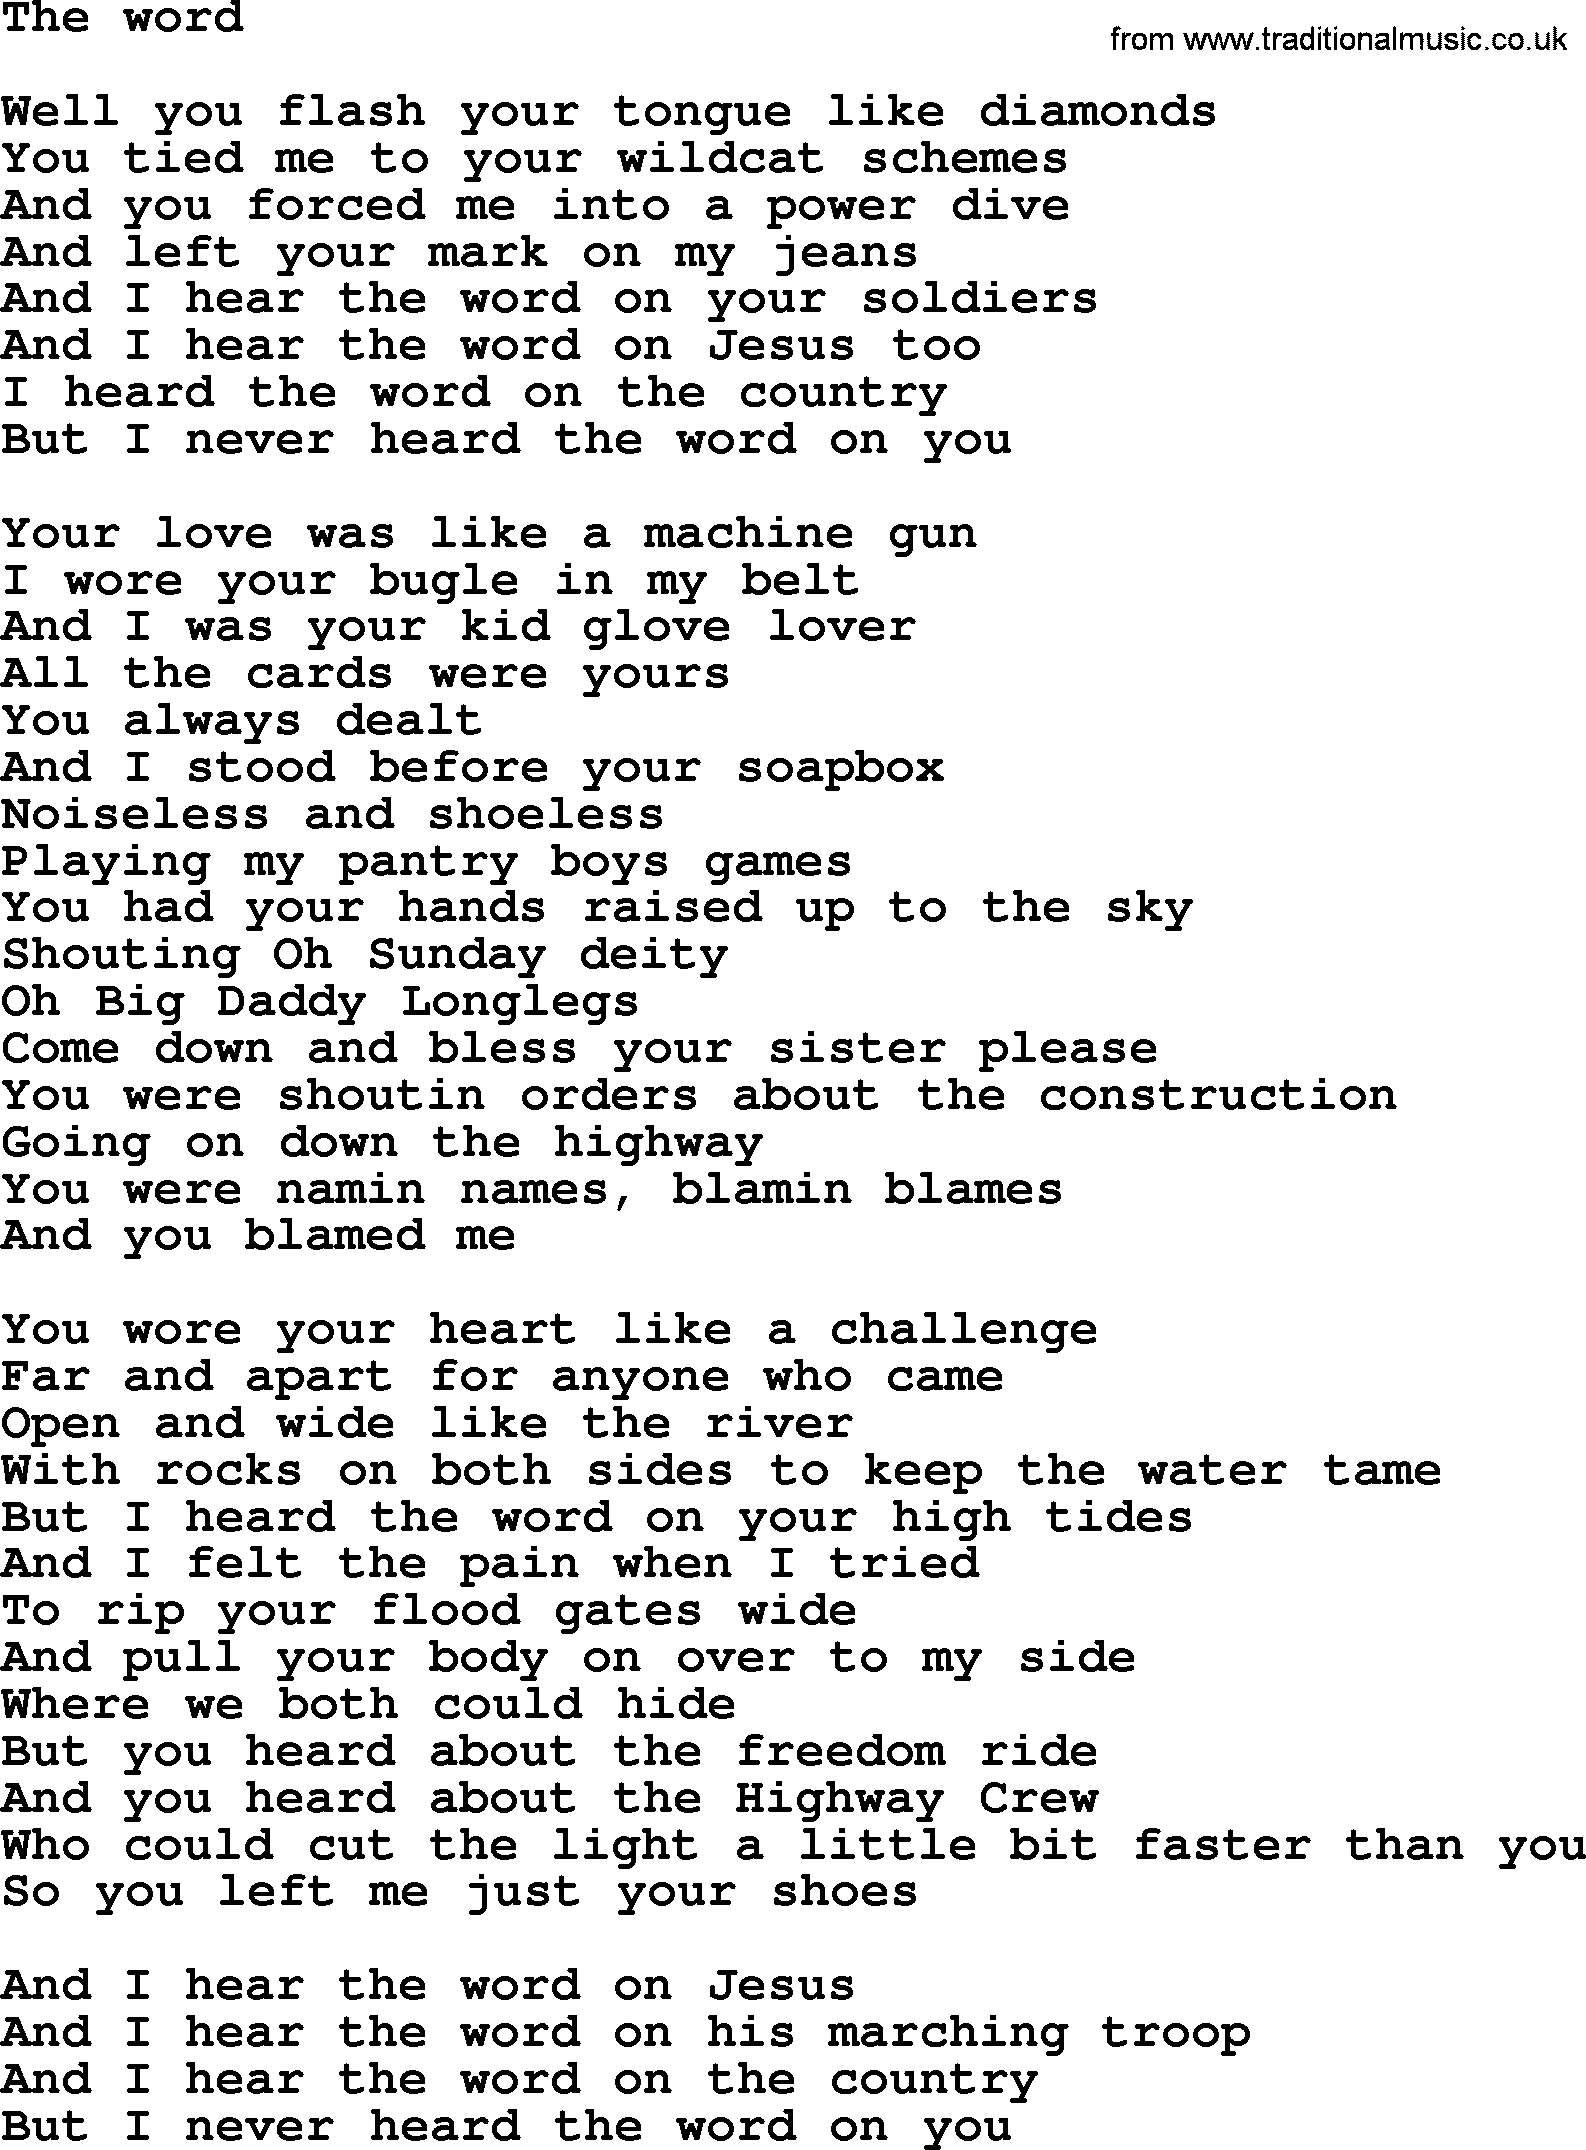 Bruce Springsteen song: The Word lyrics